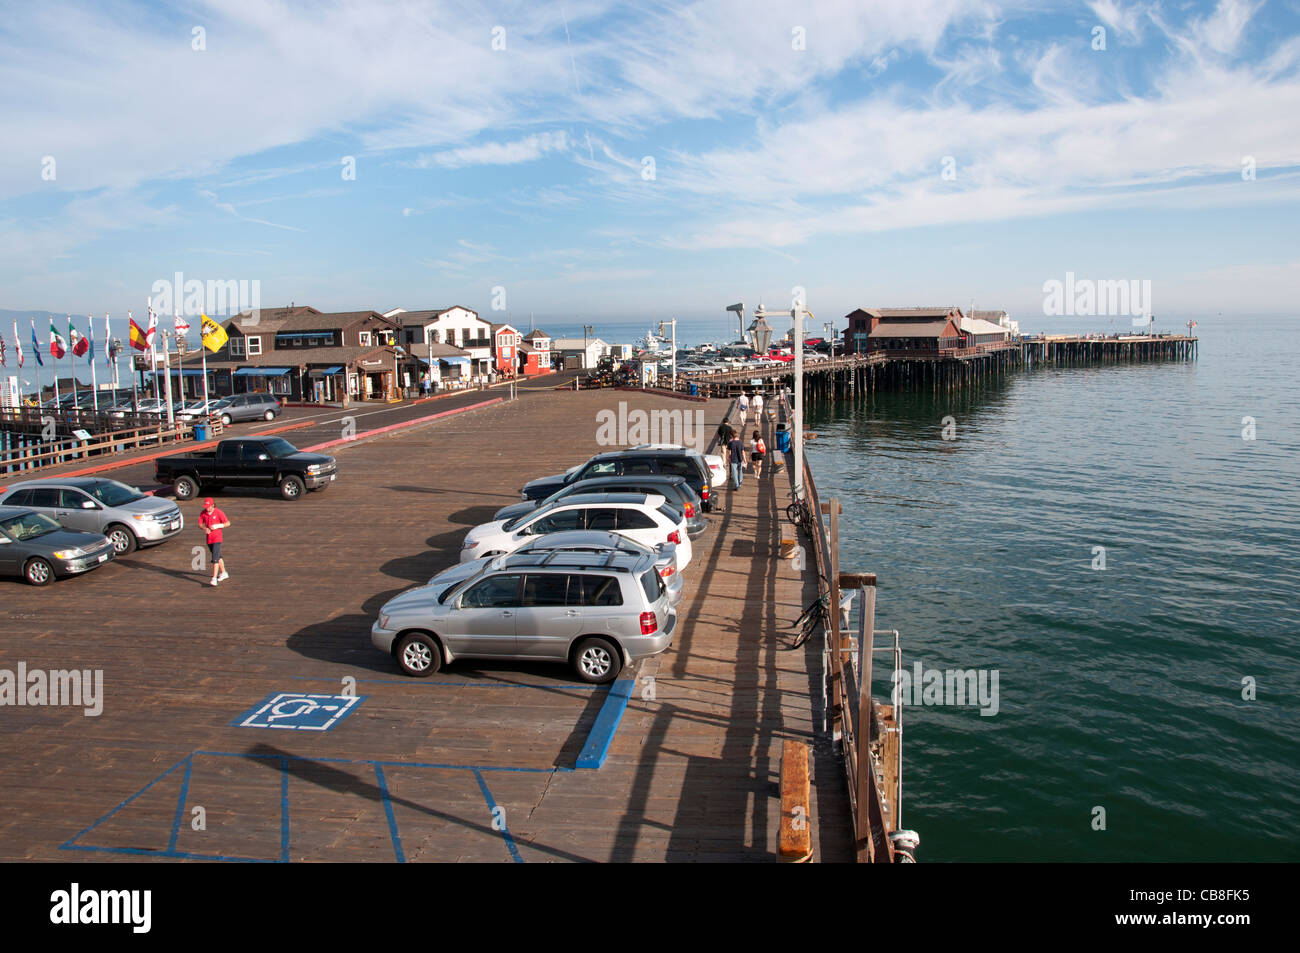 Stearns Wharf Santa Barbara Pier restaurant beach California United States Stock Photo